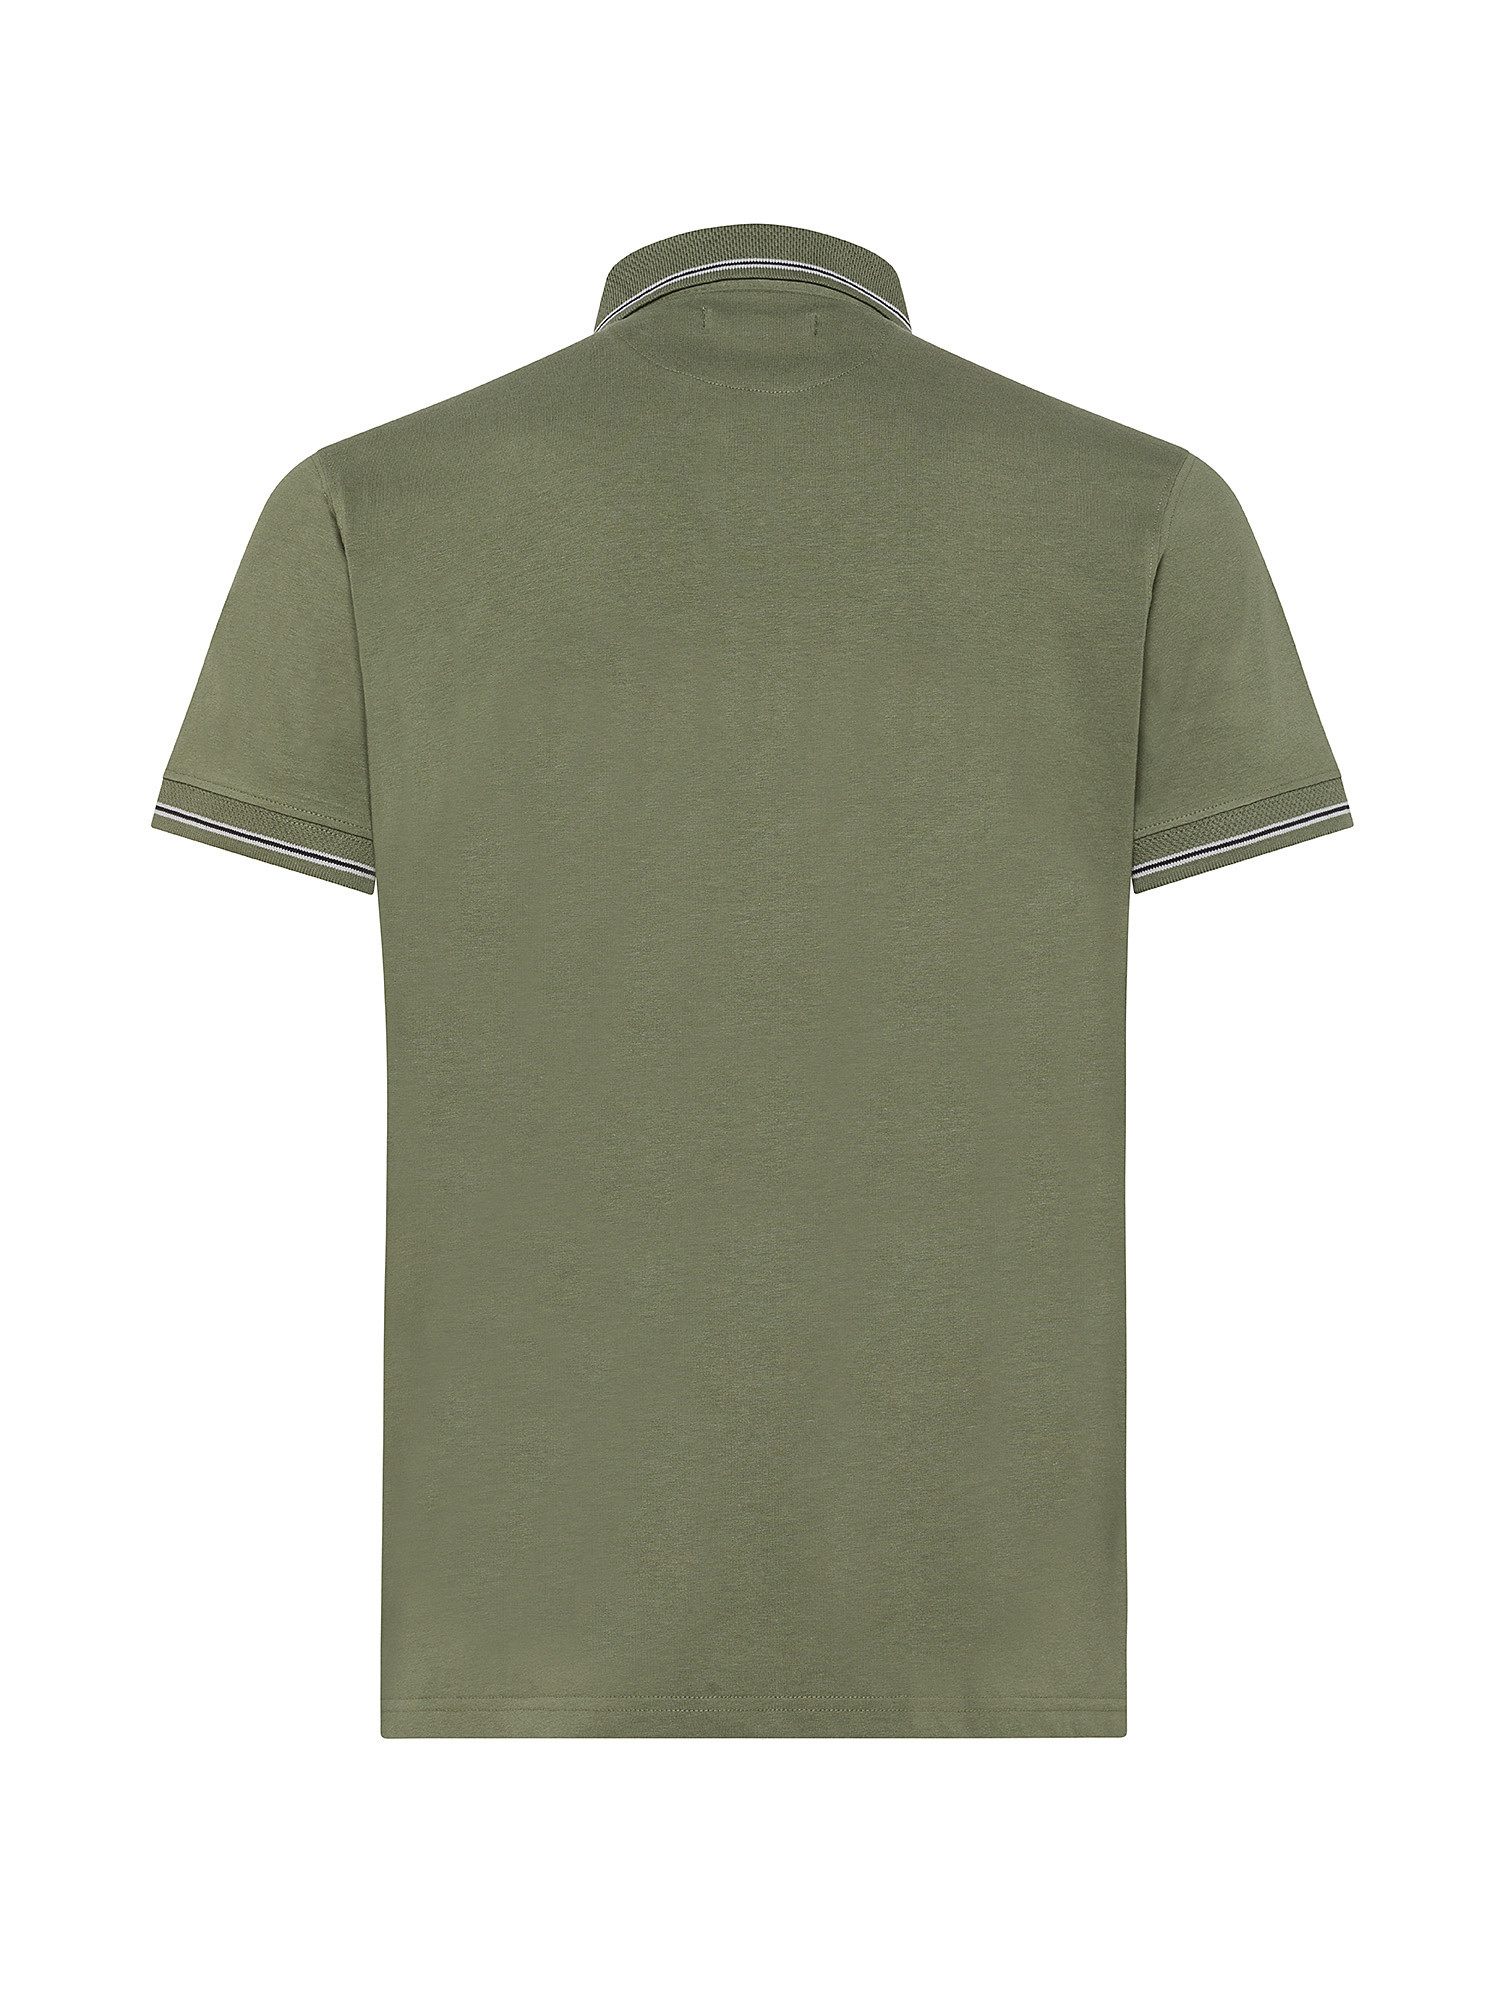 Luca D'Altieri - Jersey polo shirt, Dark Green, large image number 1